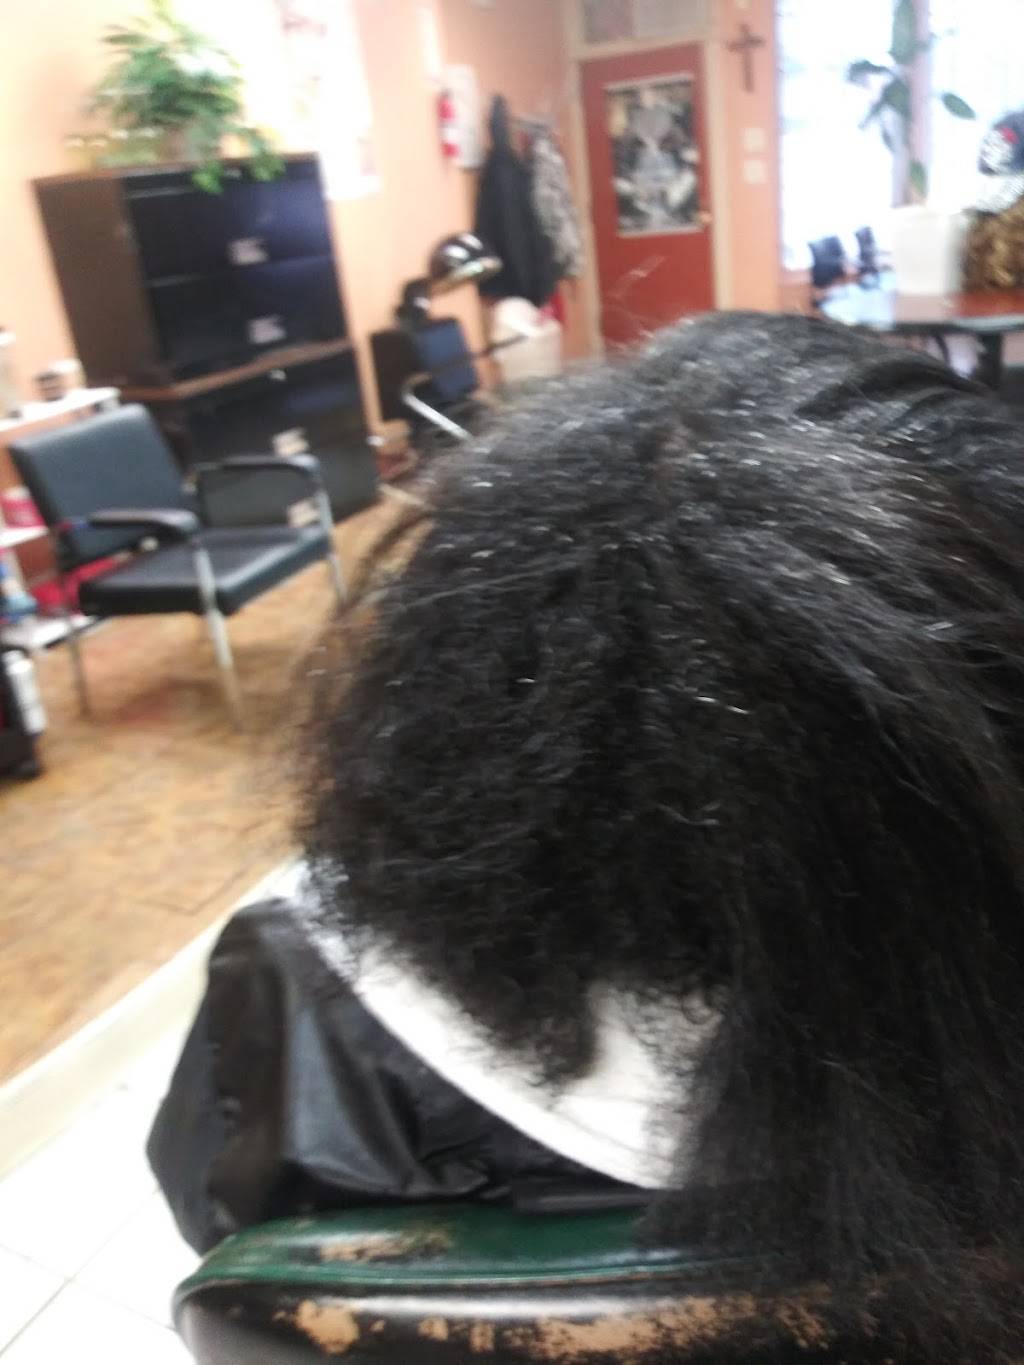 LoveSplendor. Hair Care Repair.. | 18029 James Couzens Fwy, Detroit, MI 48235, USA | Phone: (810) 522-3464